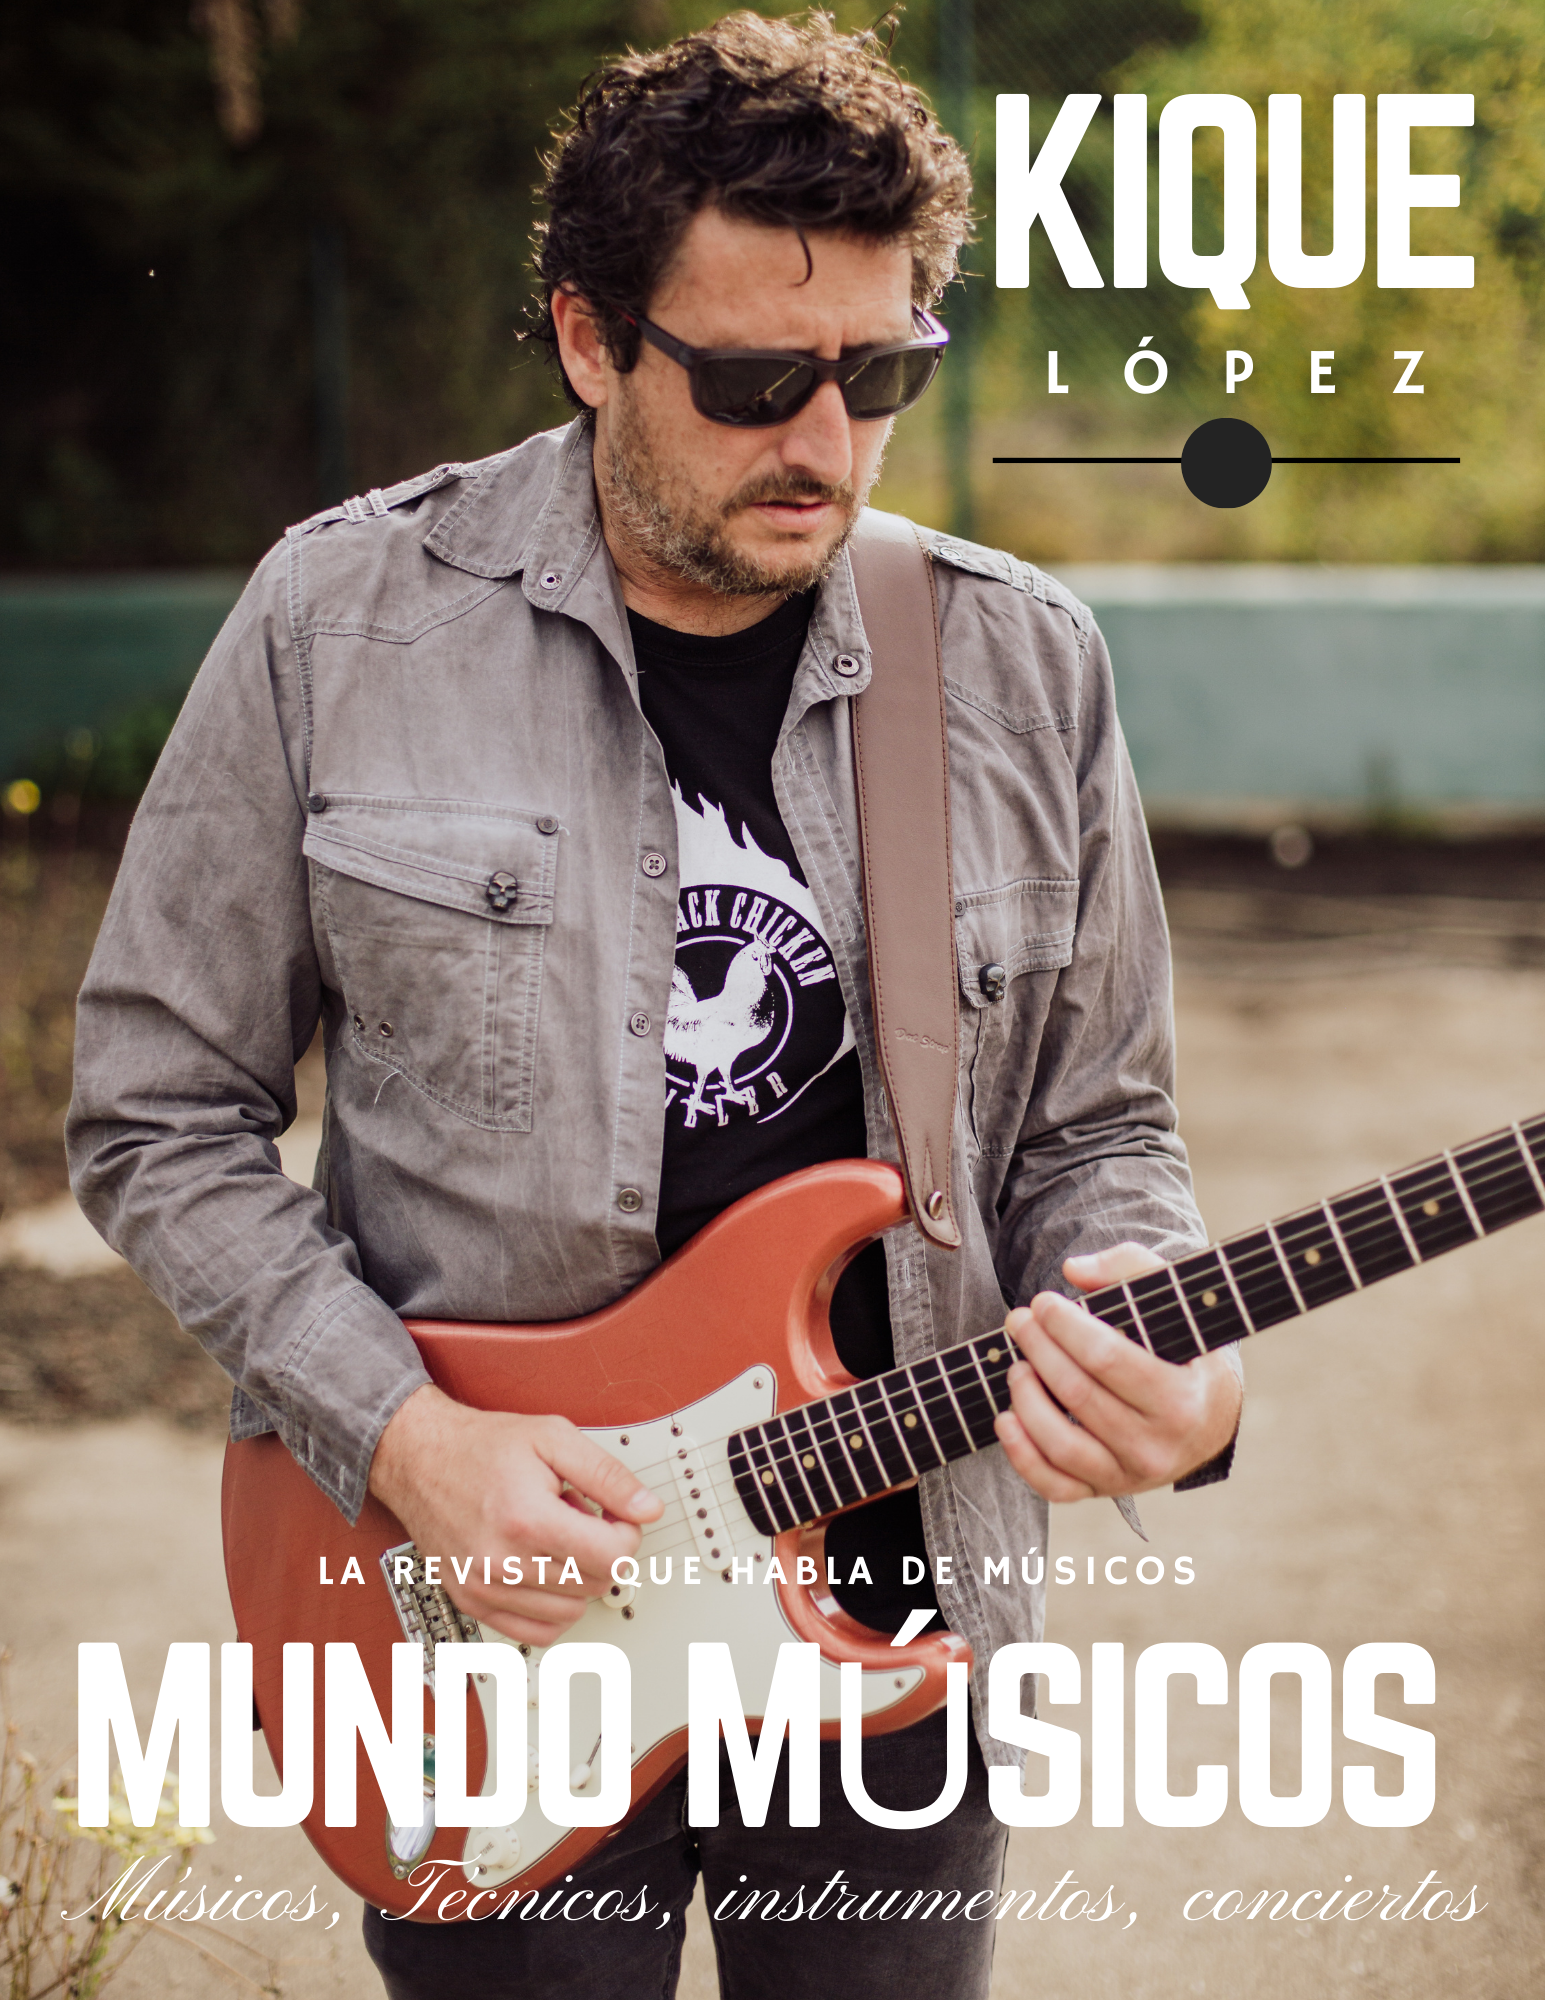 Kique López, guitarrista, cantante y compositor